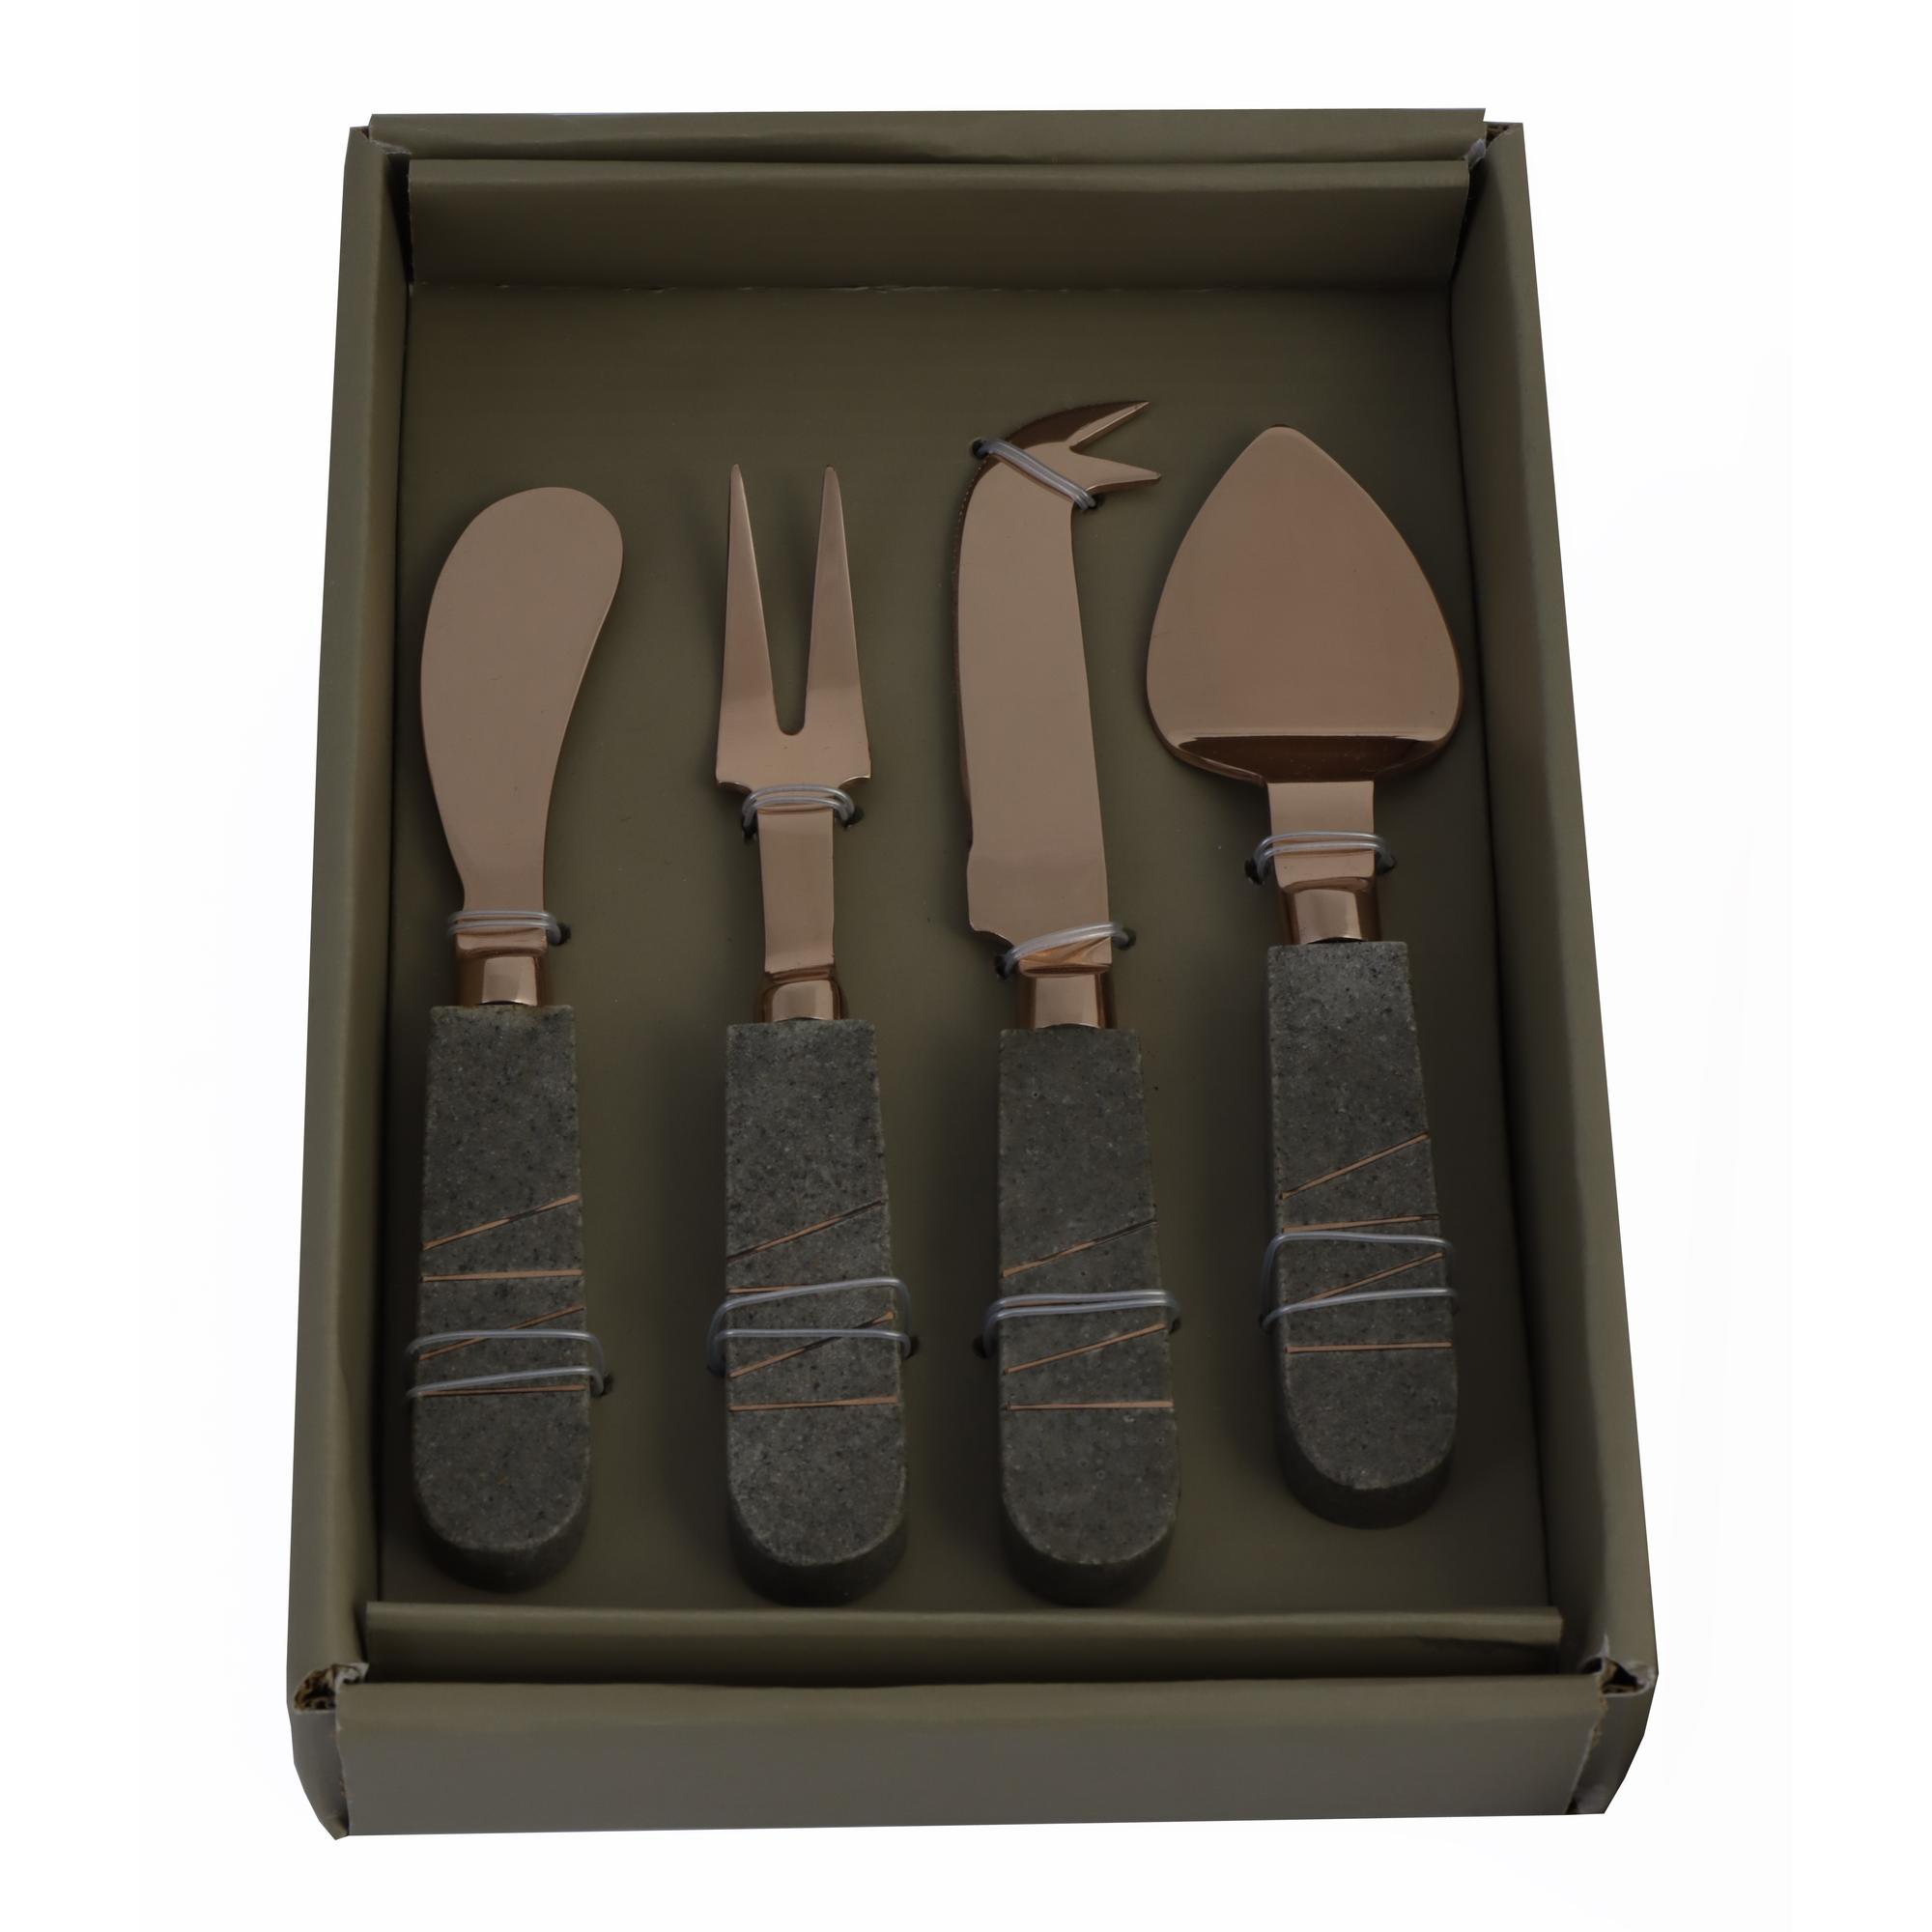 S/4 CHEESE KNIVES SET COPPER FINISH & TERRAZZO HANDLE - 429-66000051